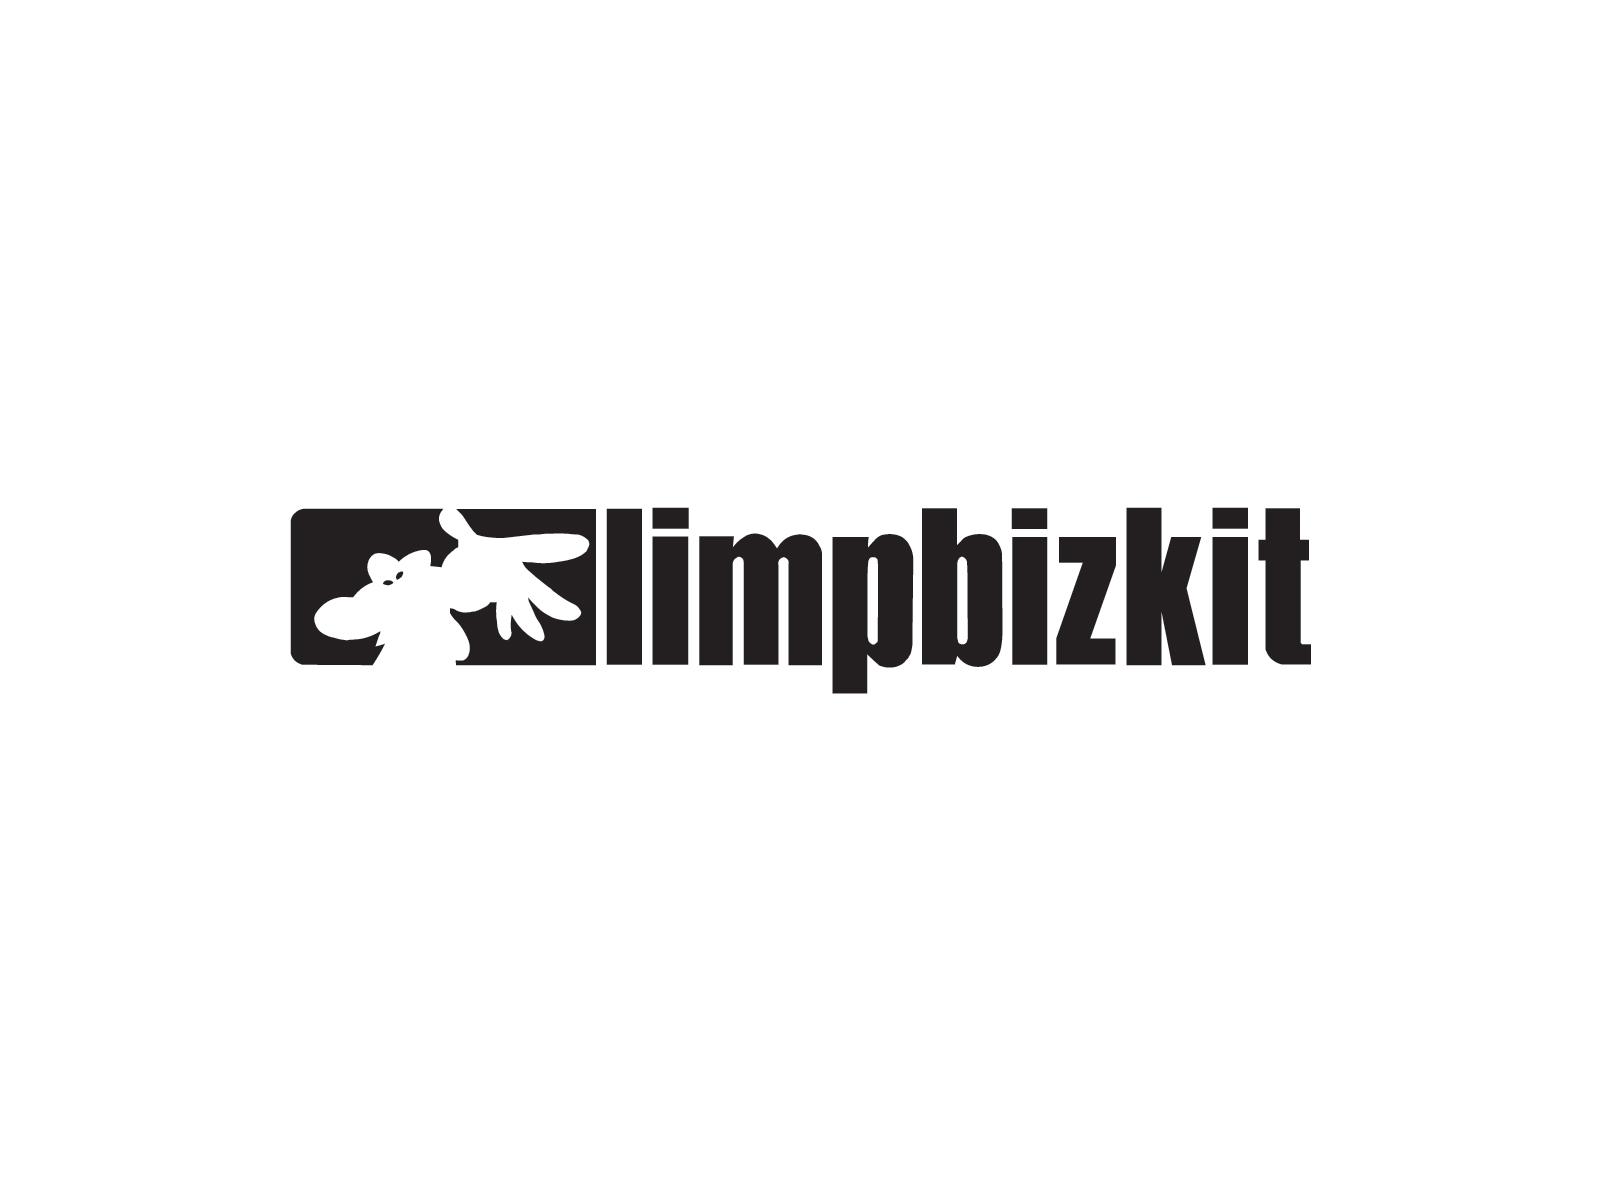 Limp Bizkit at 1024 x 1024 iPad size wallpapers HD quality